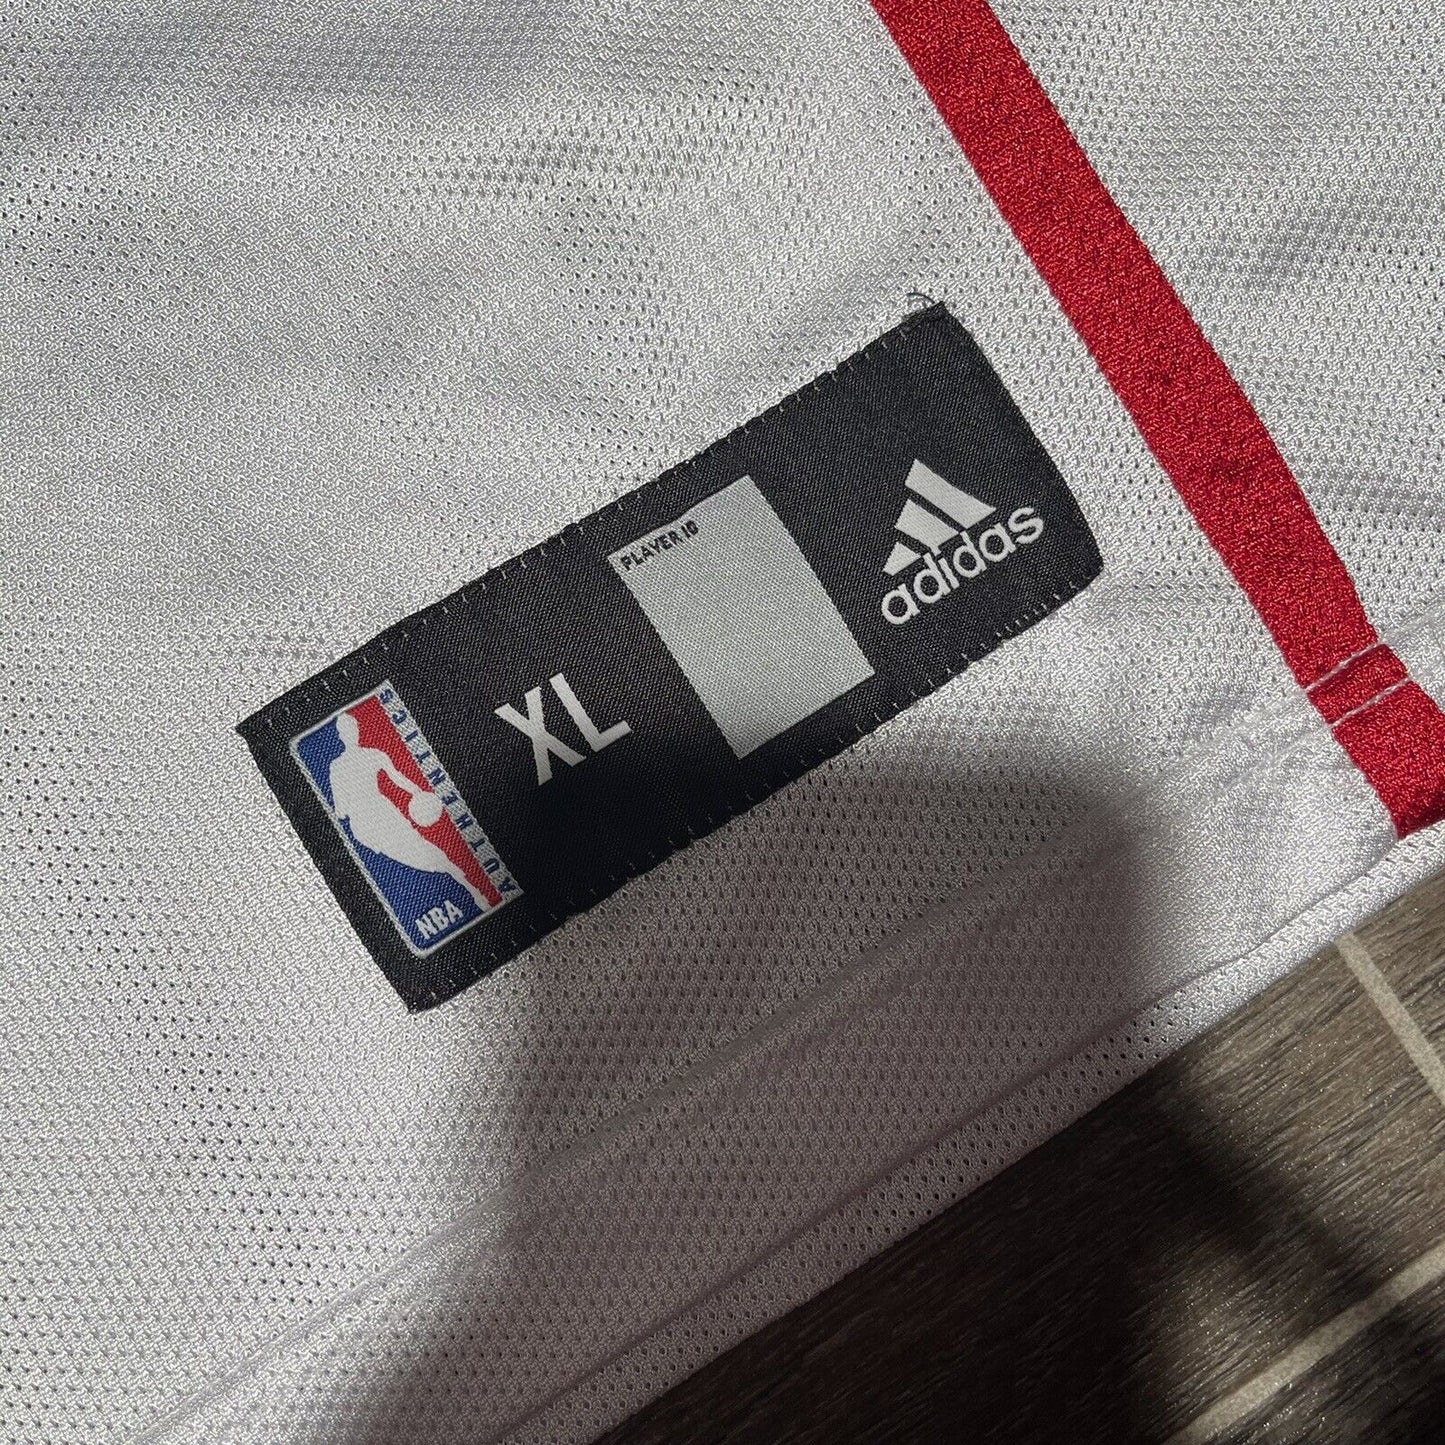 Elton Brand Philadelphia 76ers Adidas Jersey Size Xl